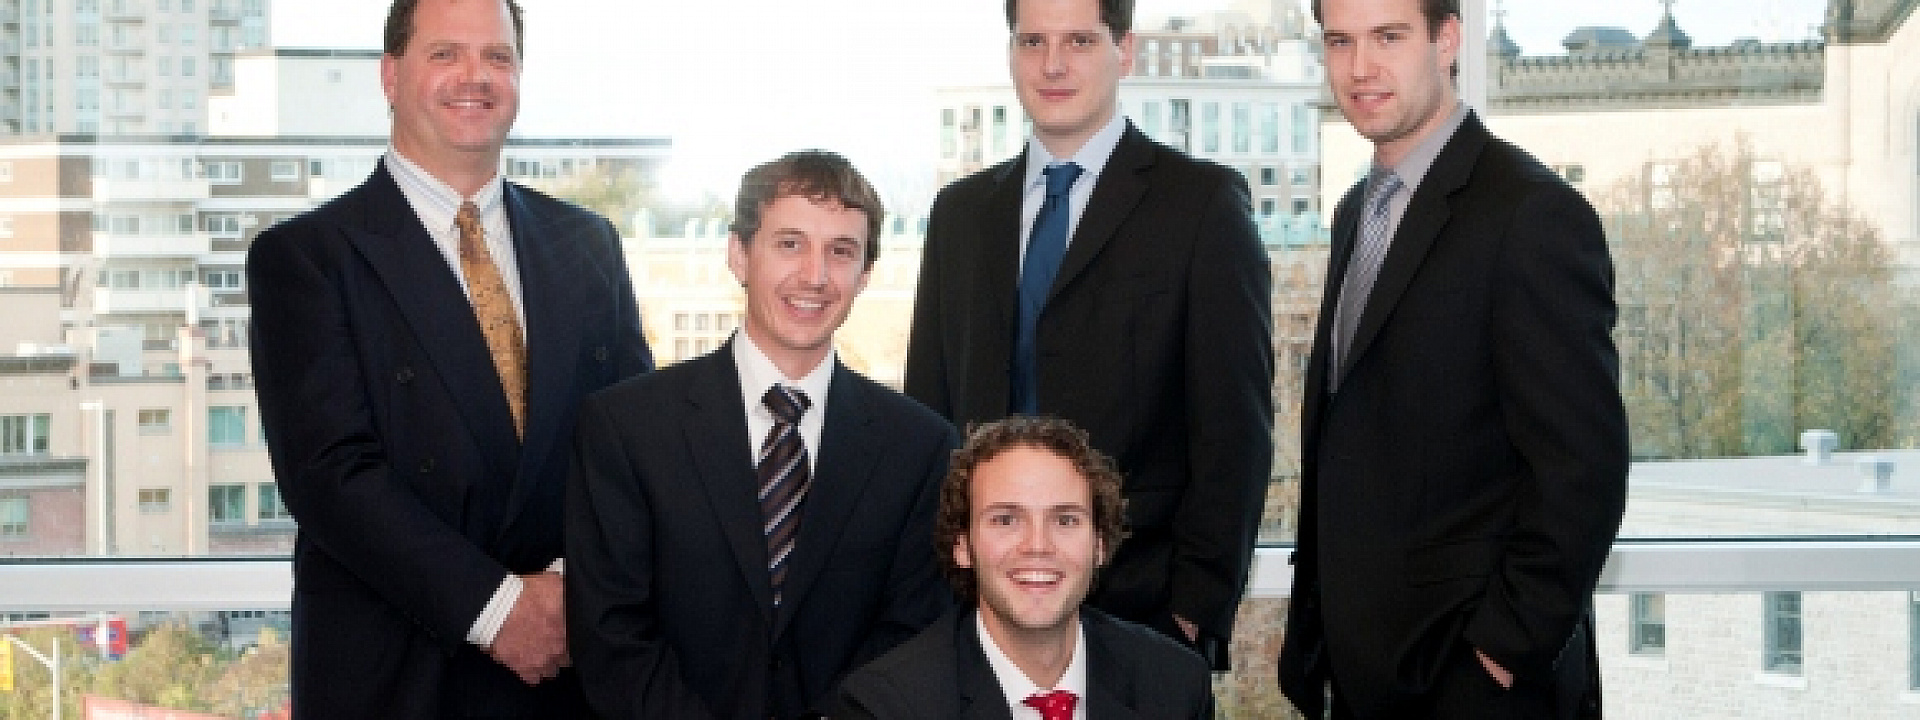 Telfer MBA Students win 2011 TATA Sustainability Cup!